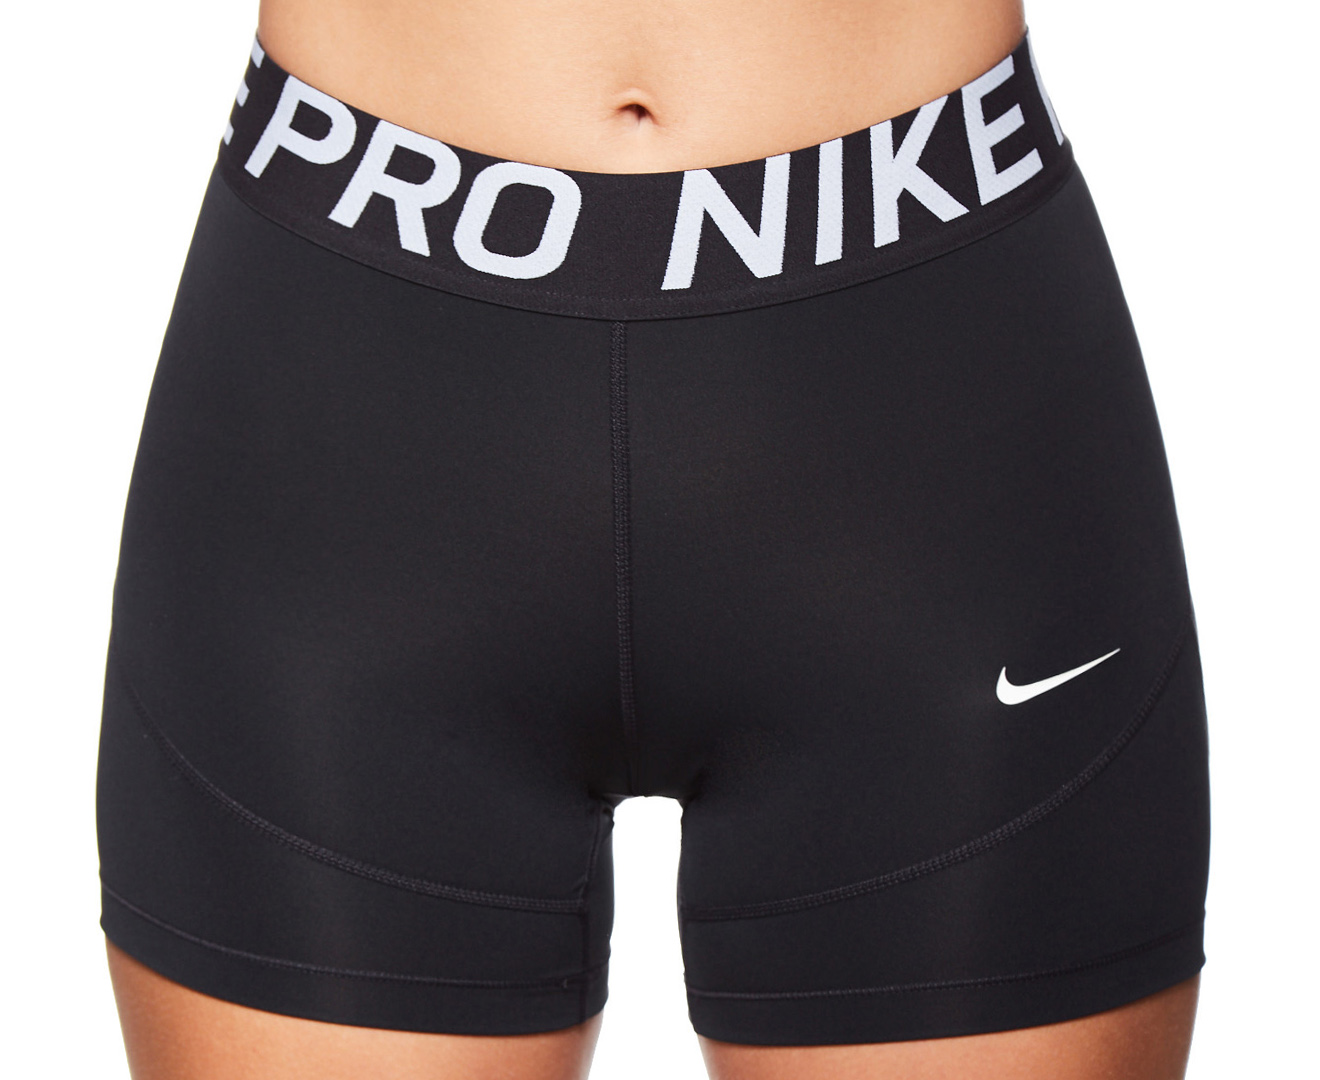 Nike Women's Nike Pro 5-Inch Short - Black | Catch.com.au